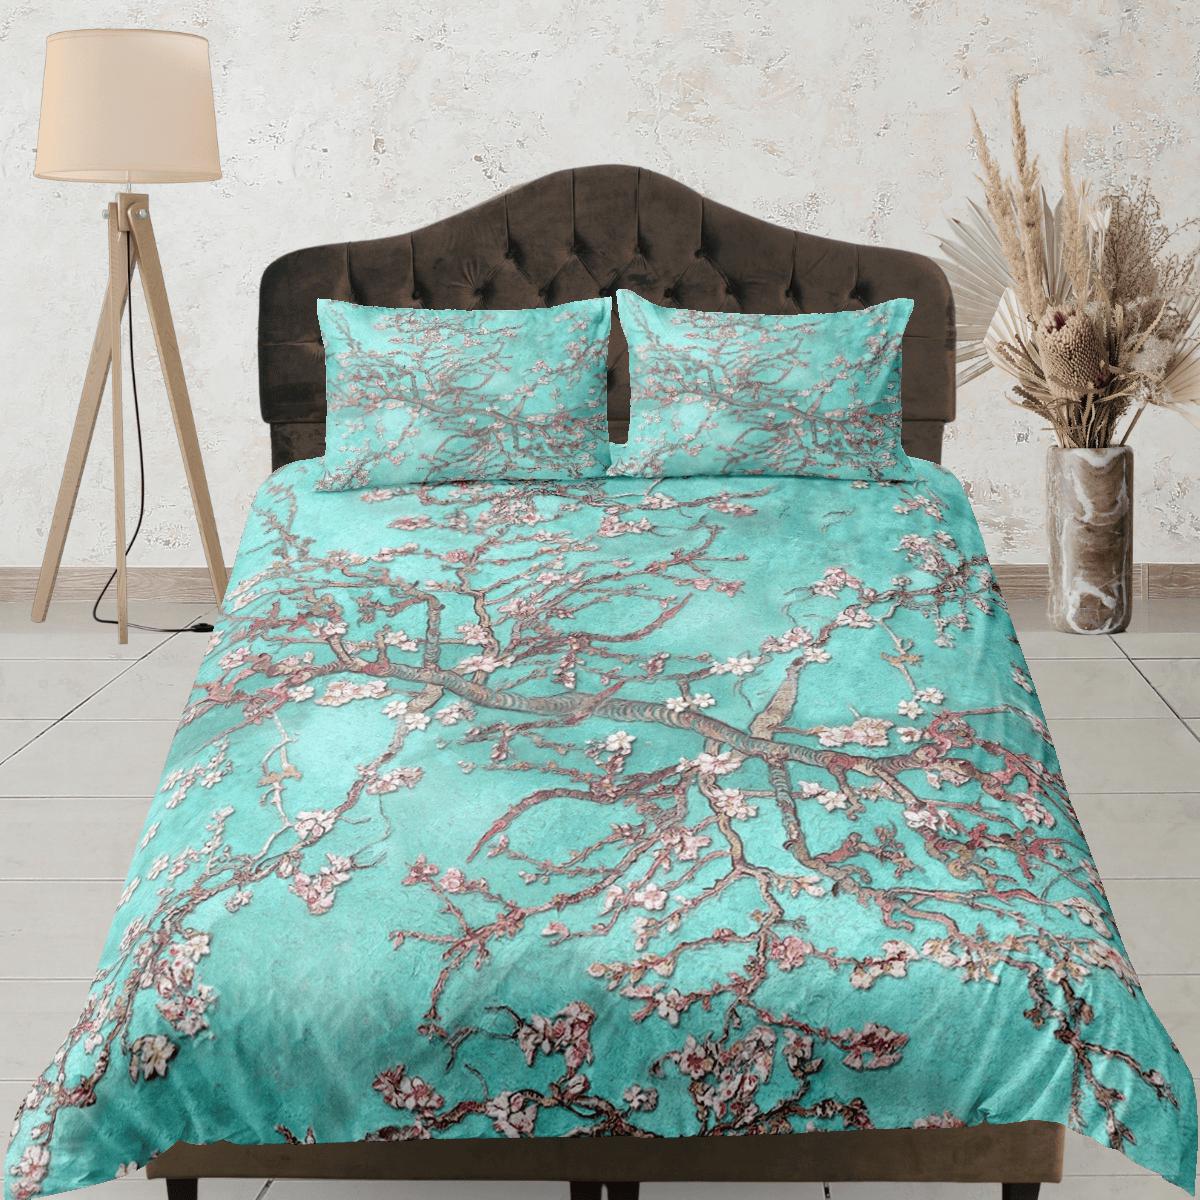 daintyduvet Aqua sea green bedding cherry blossom floral prints duvet cover queen, king, boho bedding designer bedspread full size bedding aesthetic